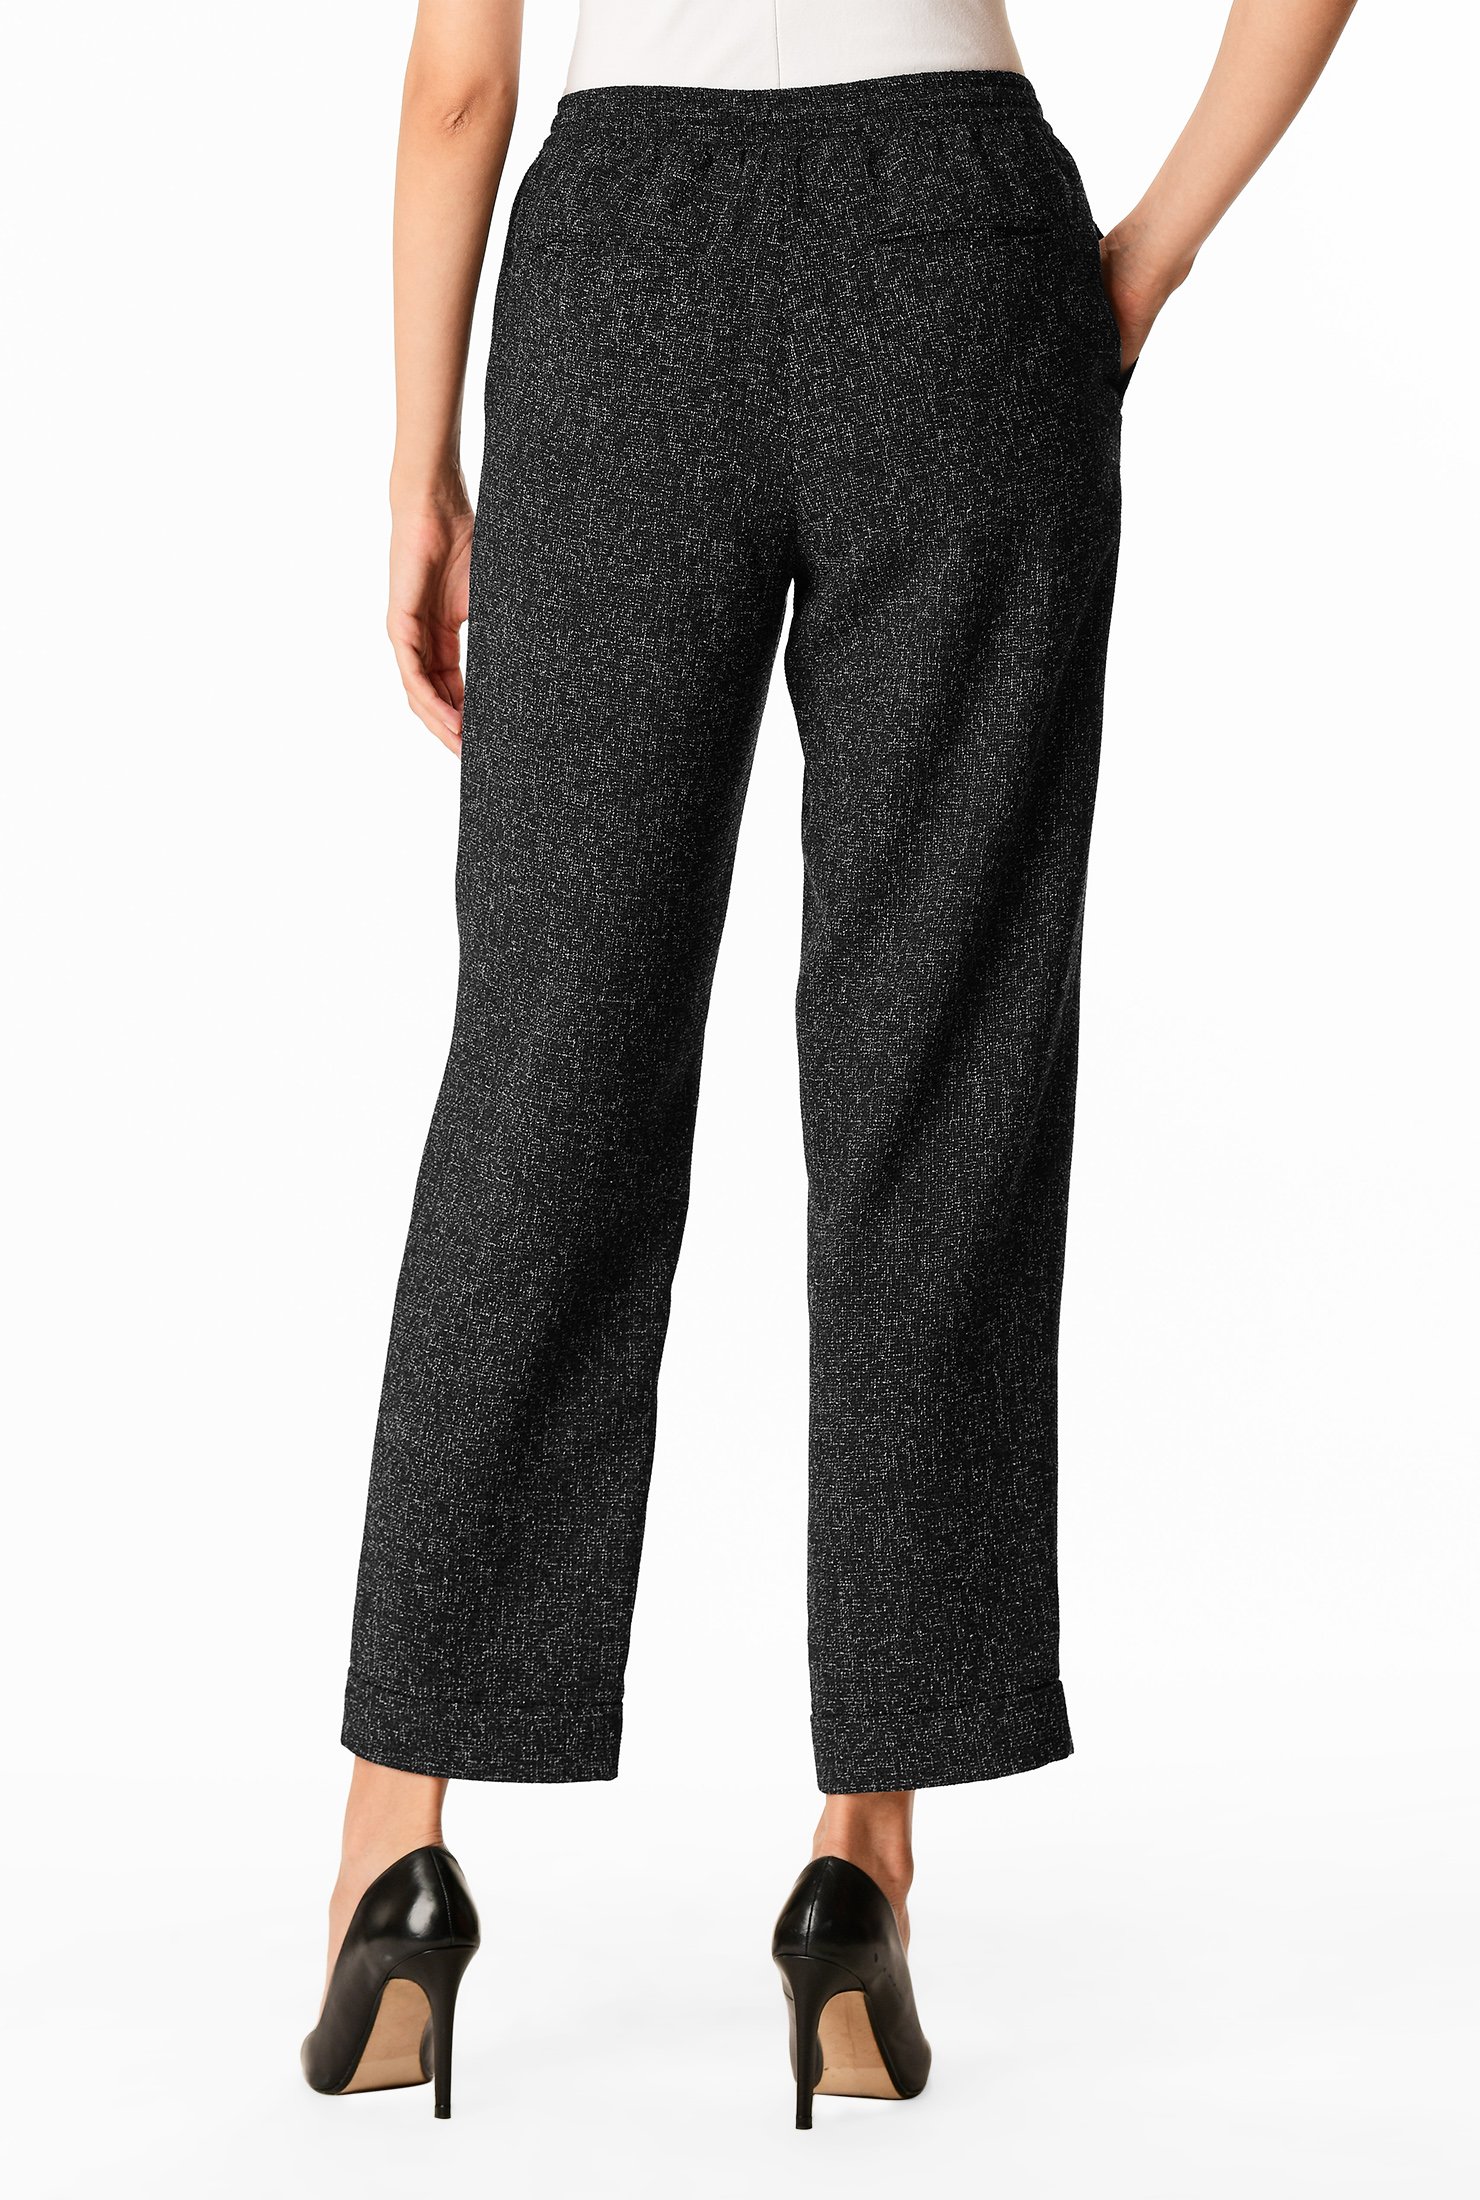 Shop Drawstring waist textured cross-hatch suiting pants | eShakti